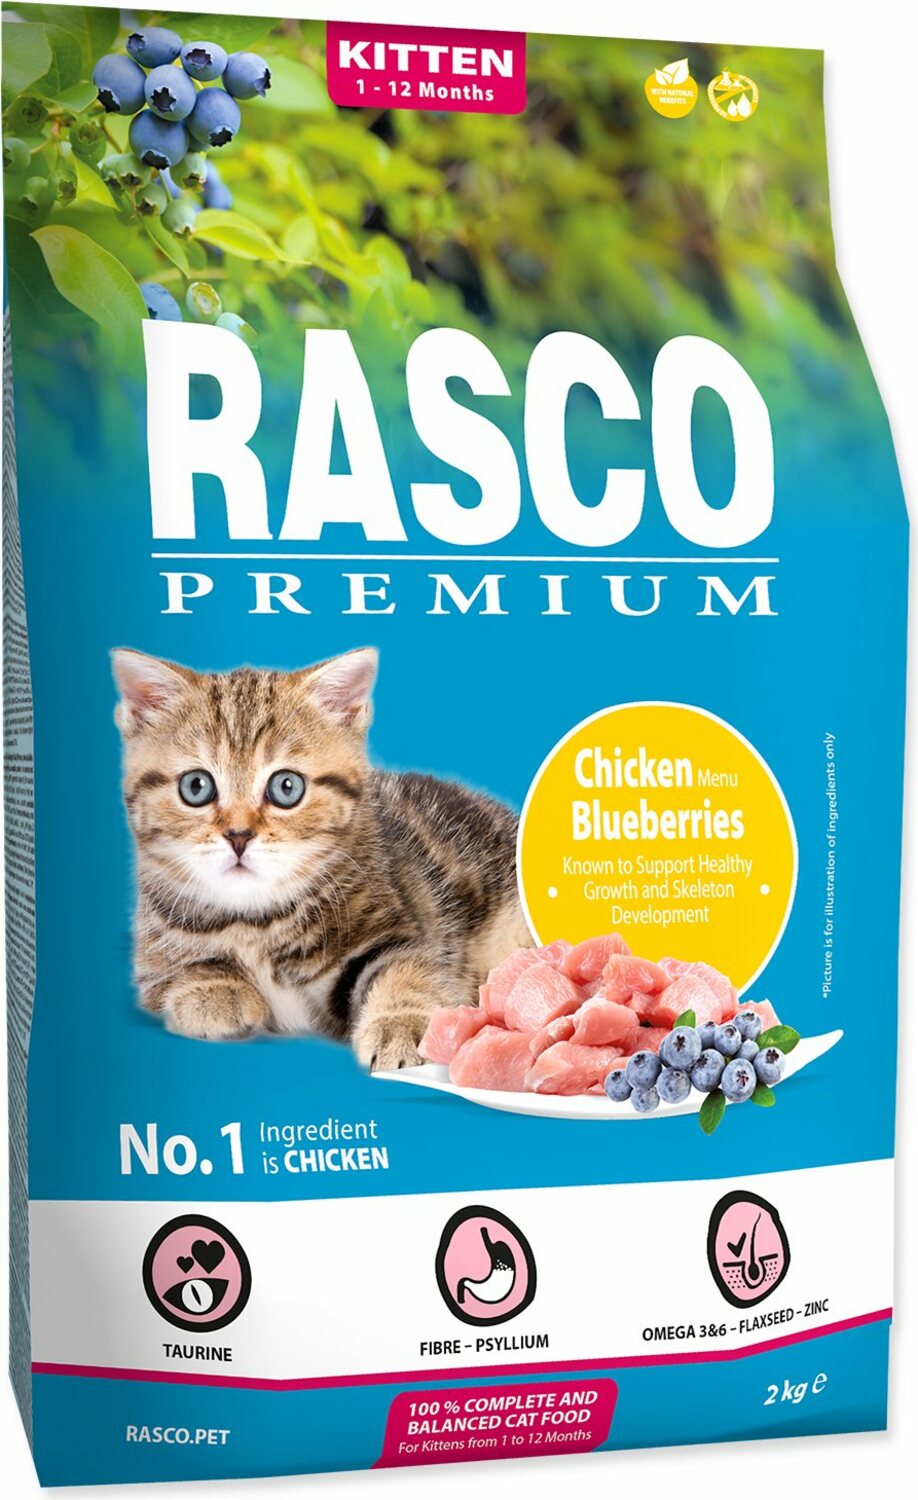 Krmivo Rasco Premium Kitten kuře s borůvkou 2kg